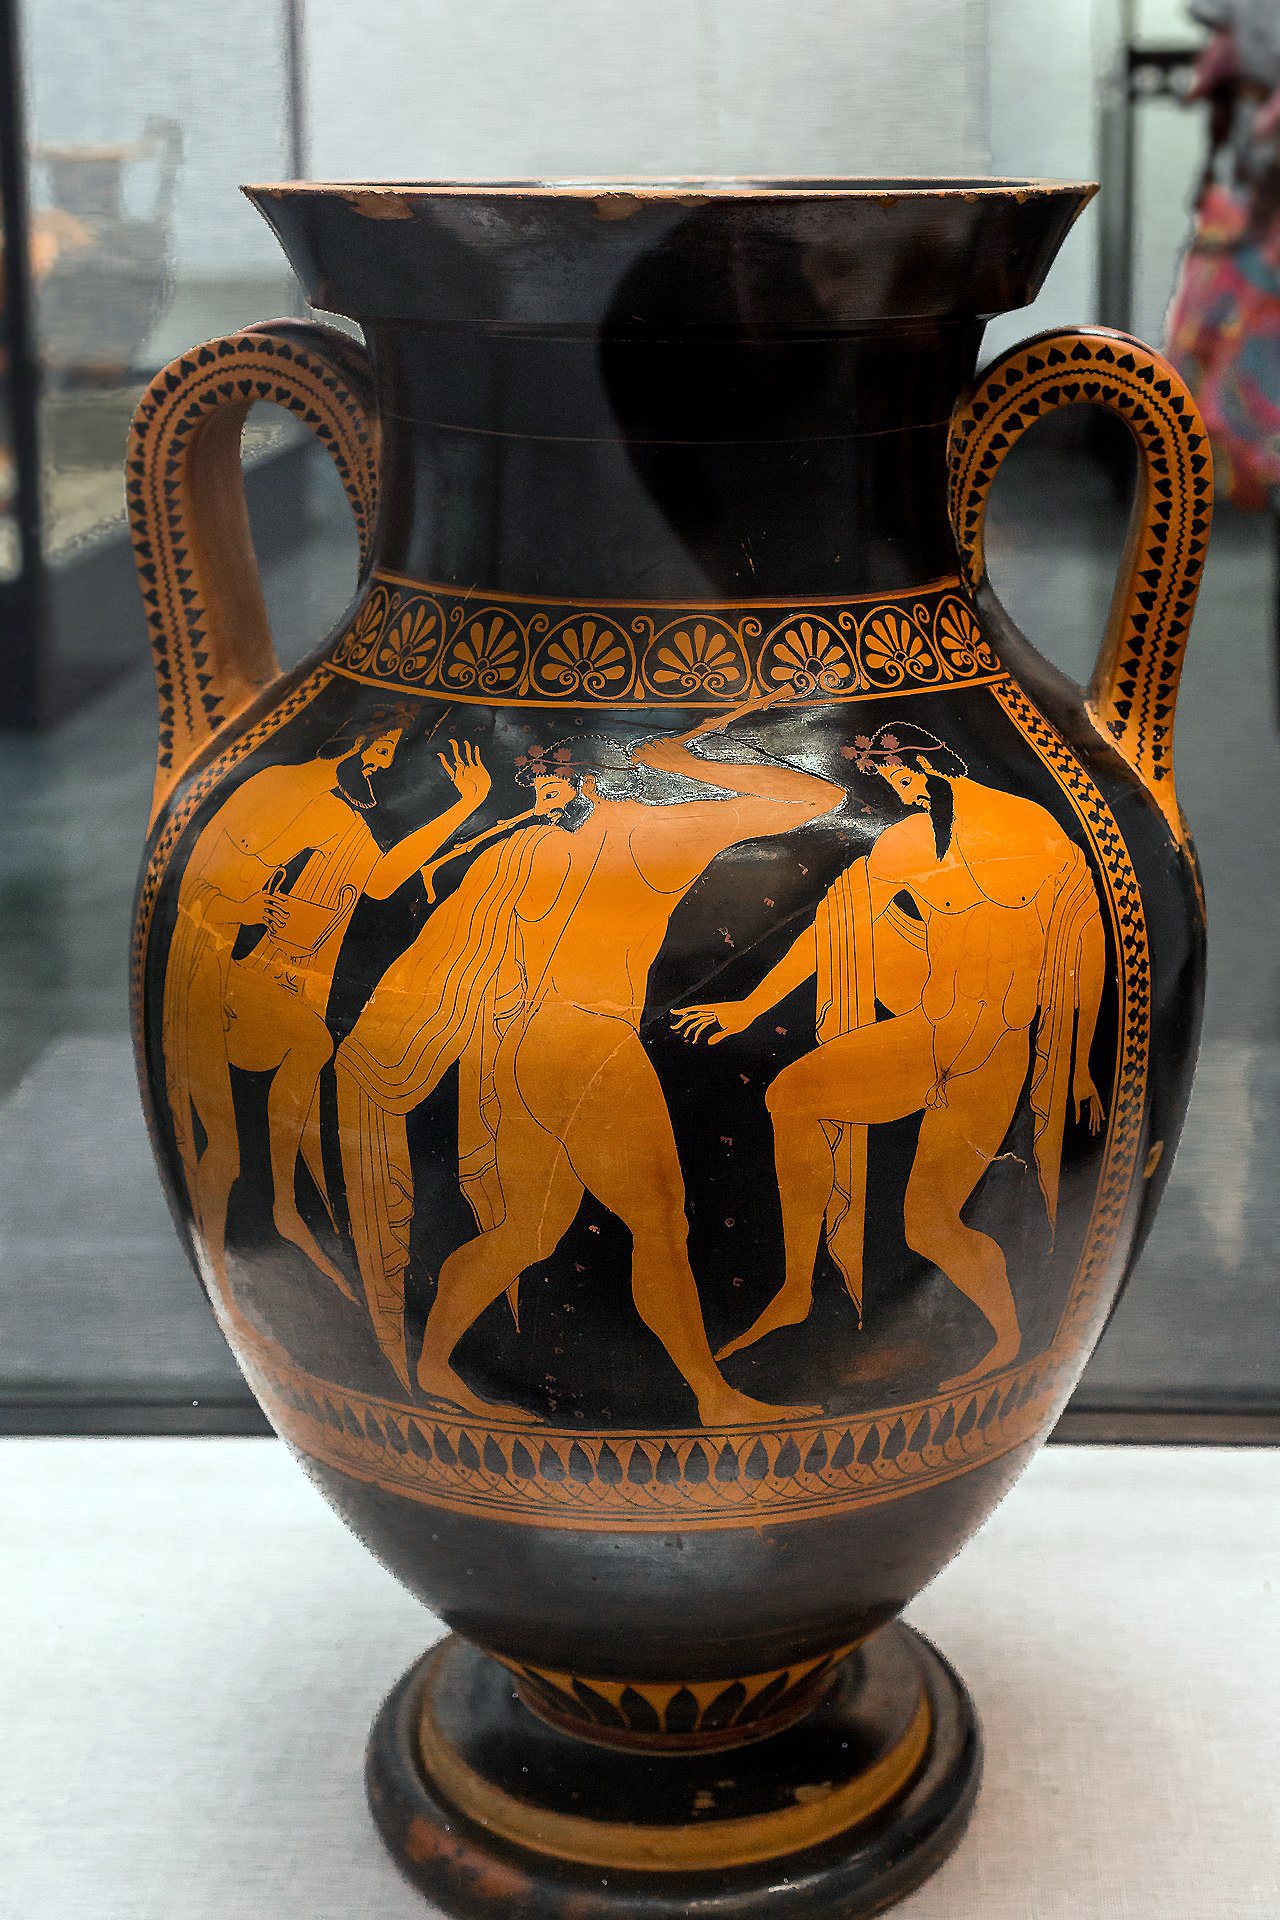 Euthymides, Three Revelers (Athenian red-figure amphora), c. 510 B.C.E., 61 cm high (Staatliche Antikensammlungen, Munich; photo: ArchaiOptix, CC BY-SA 4.0)